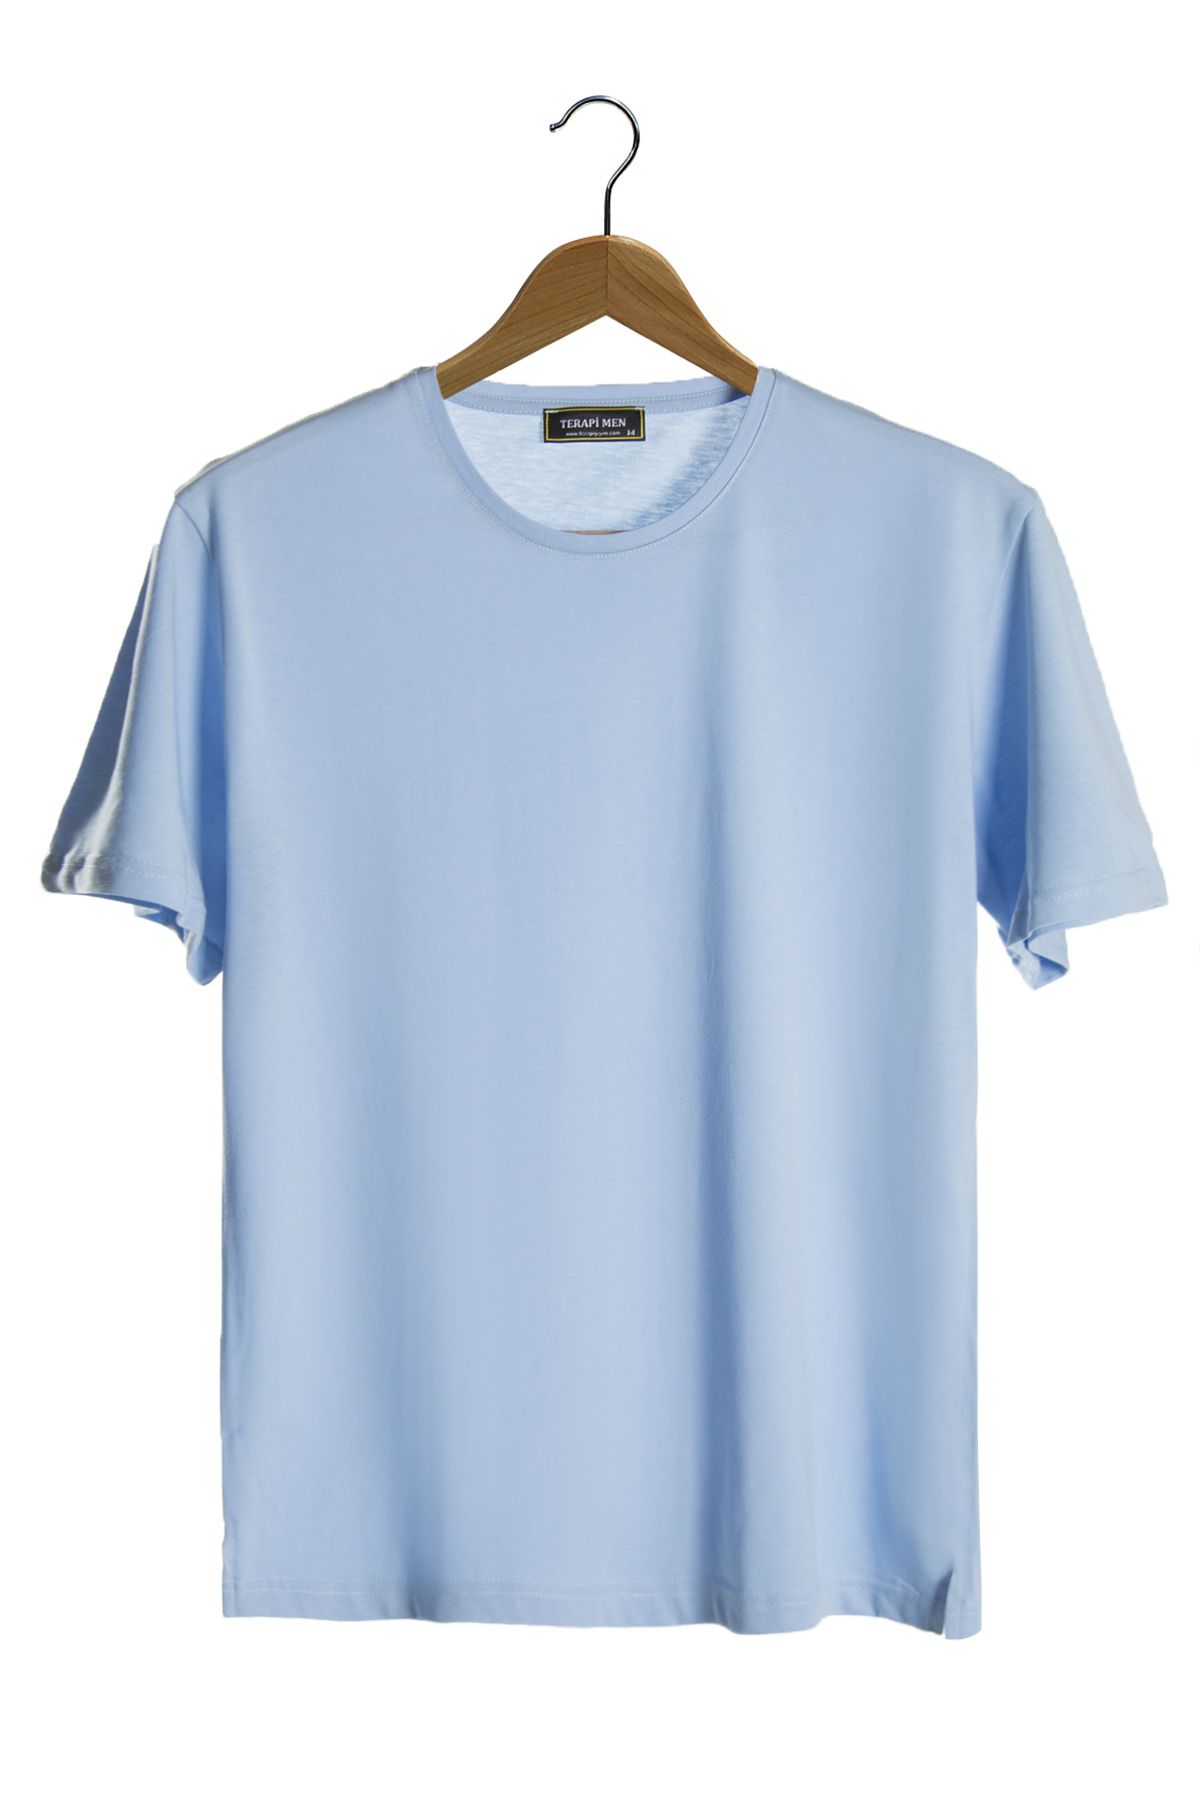 Terapi Men Unisex Açık Mavi Bisiklet Yaka Basic Oversize T-shirt